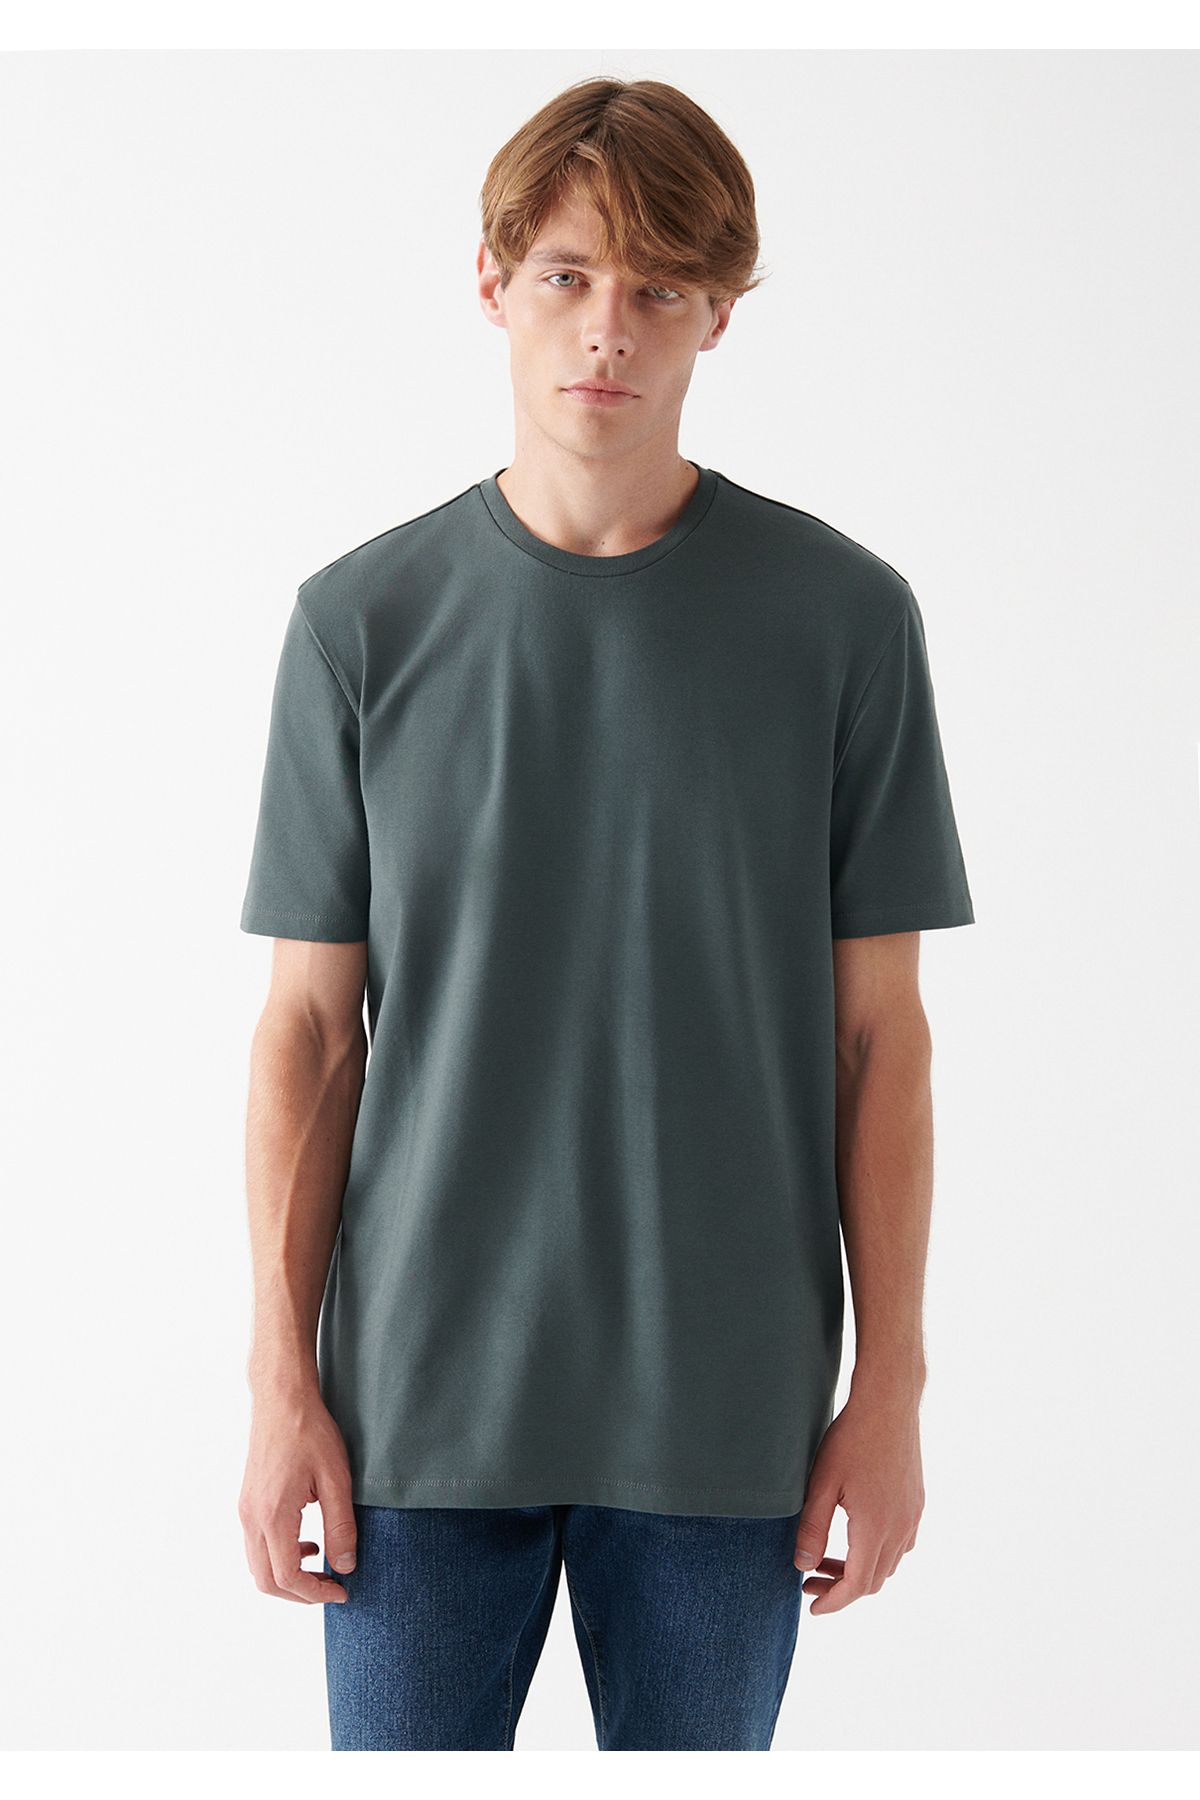 Mavi تی شرت پایه سبز نفتی مناسب / برش معمولی 0610252-71598